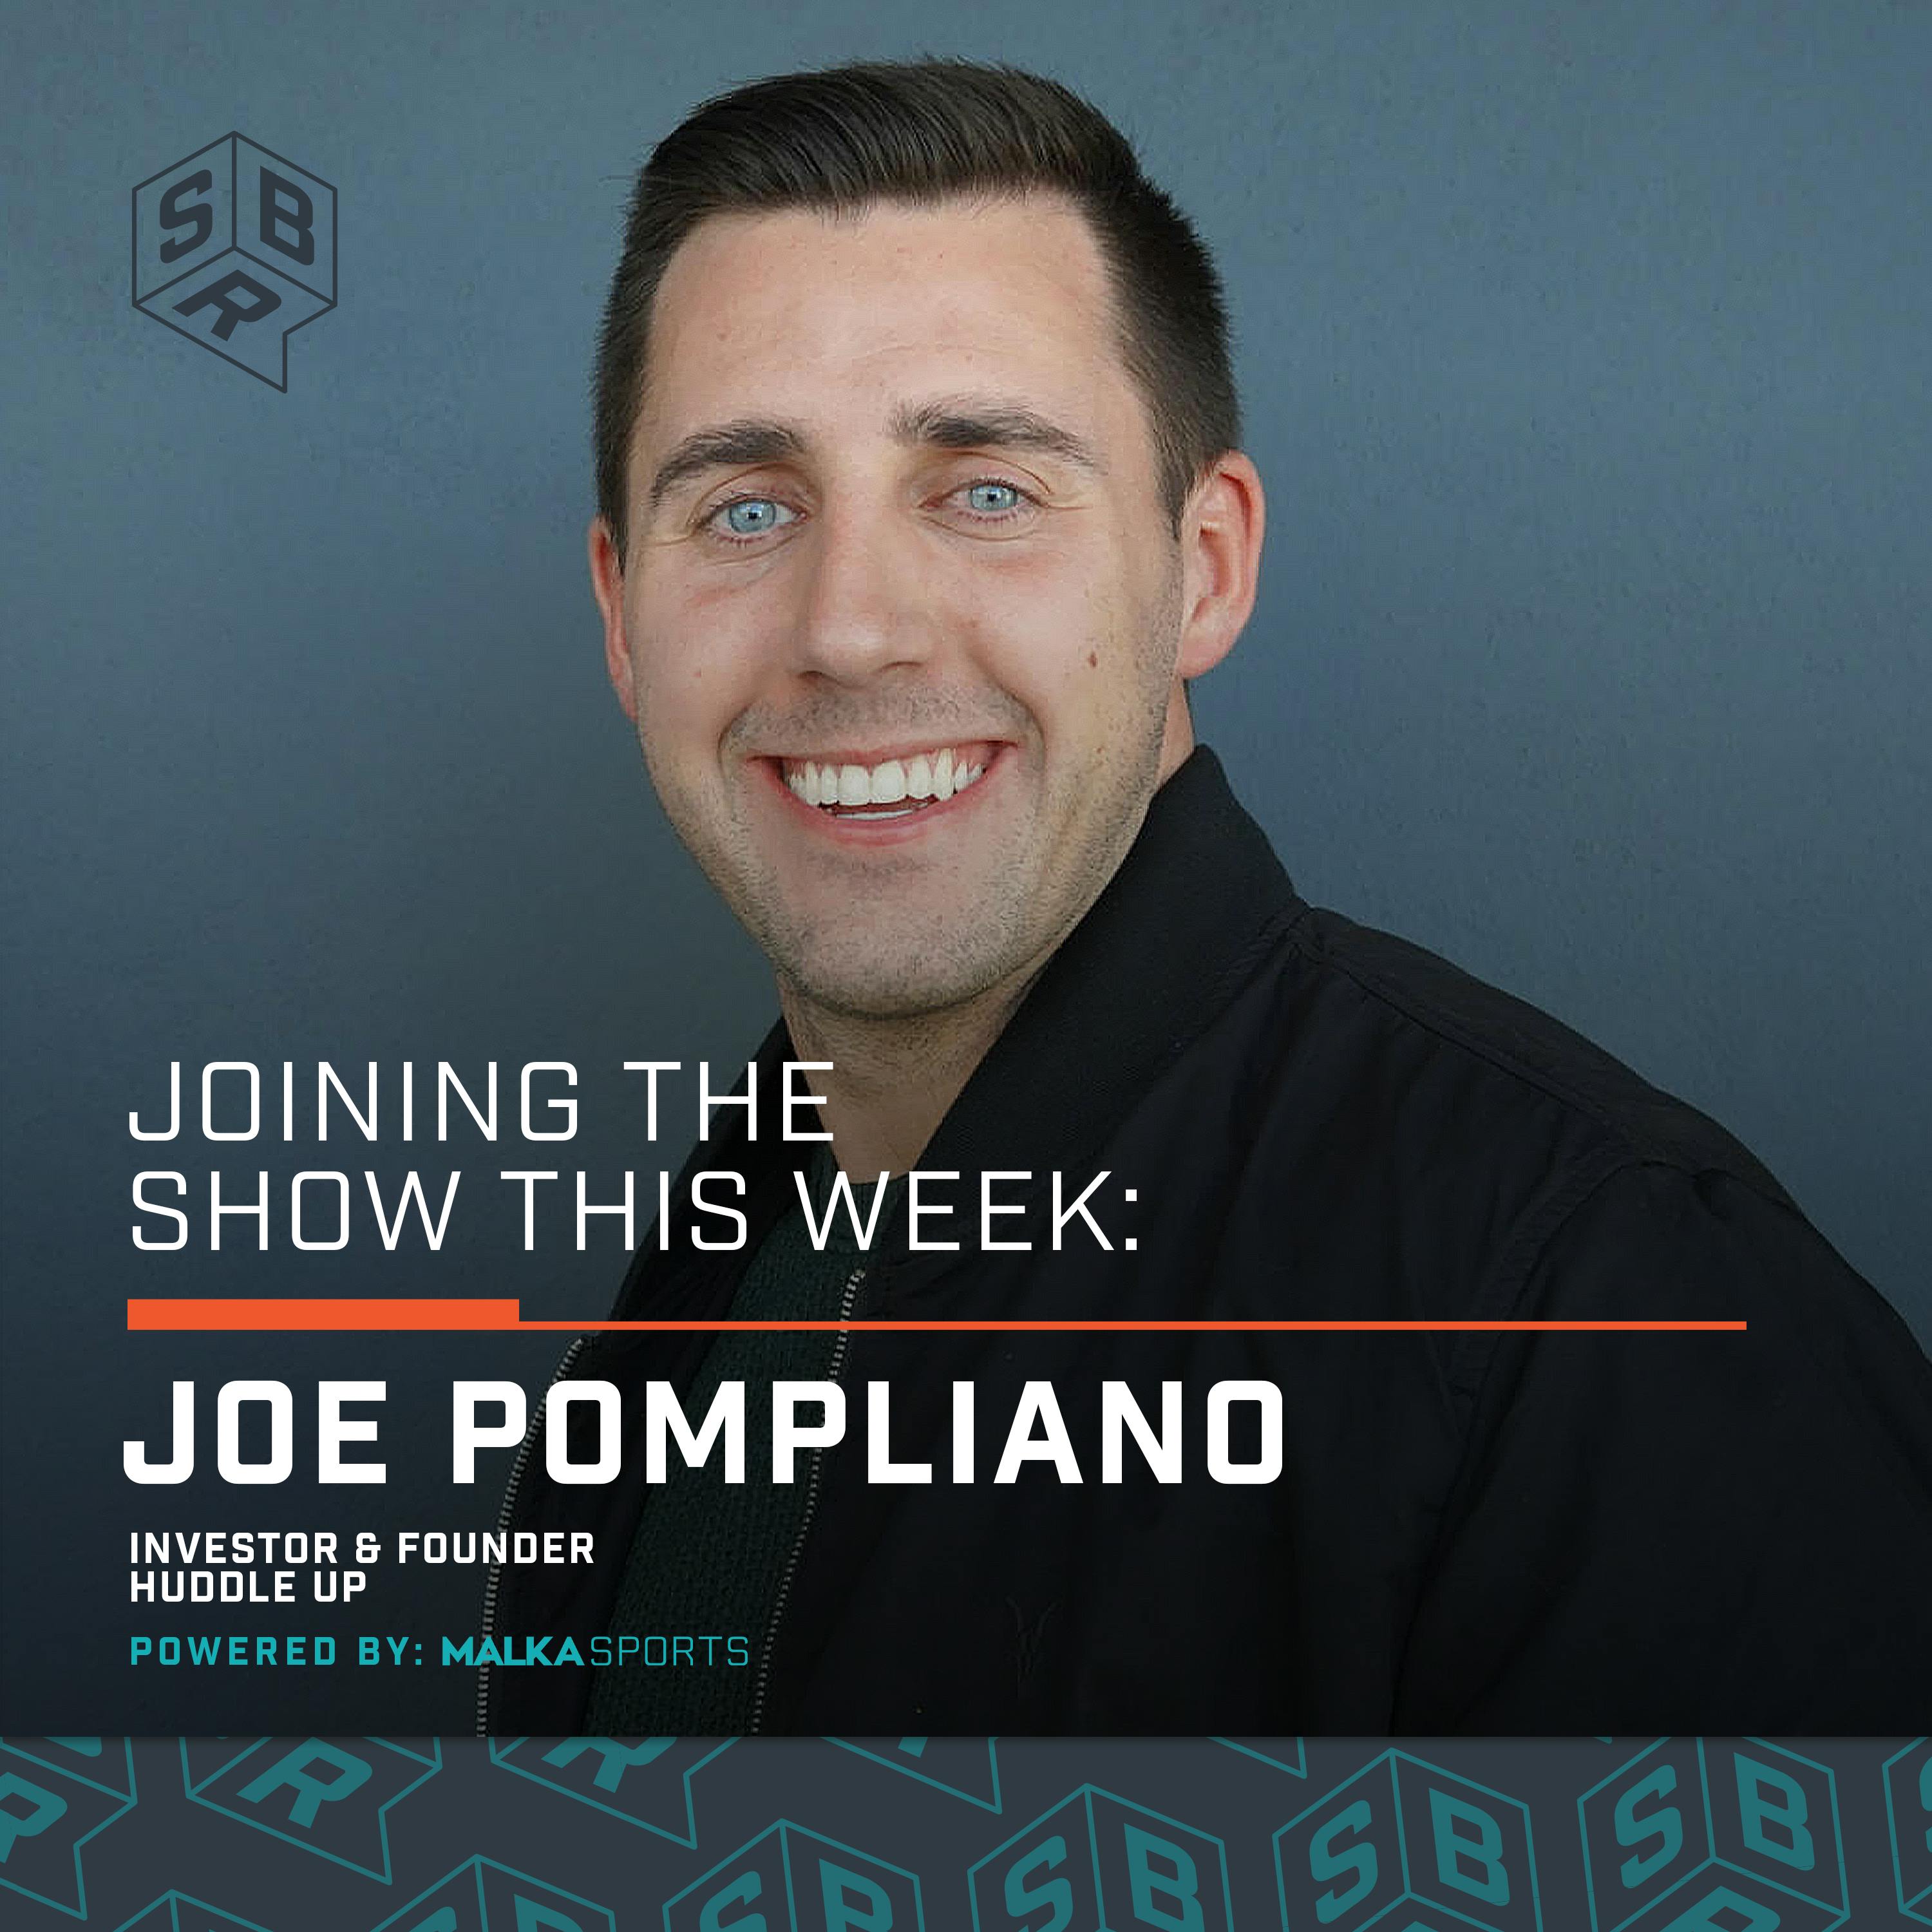 Joe Pompliano (@JoePompliano), Founder & Investor, Huddle Up